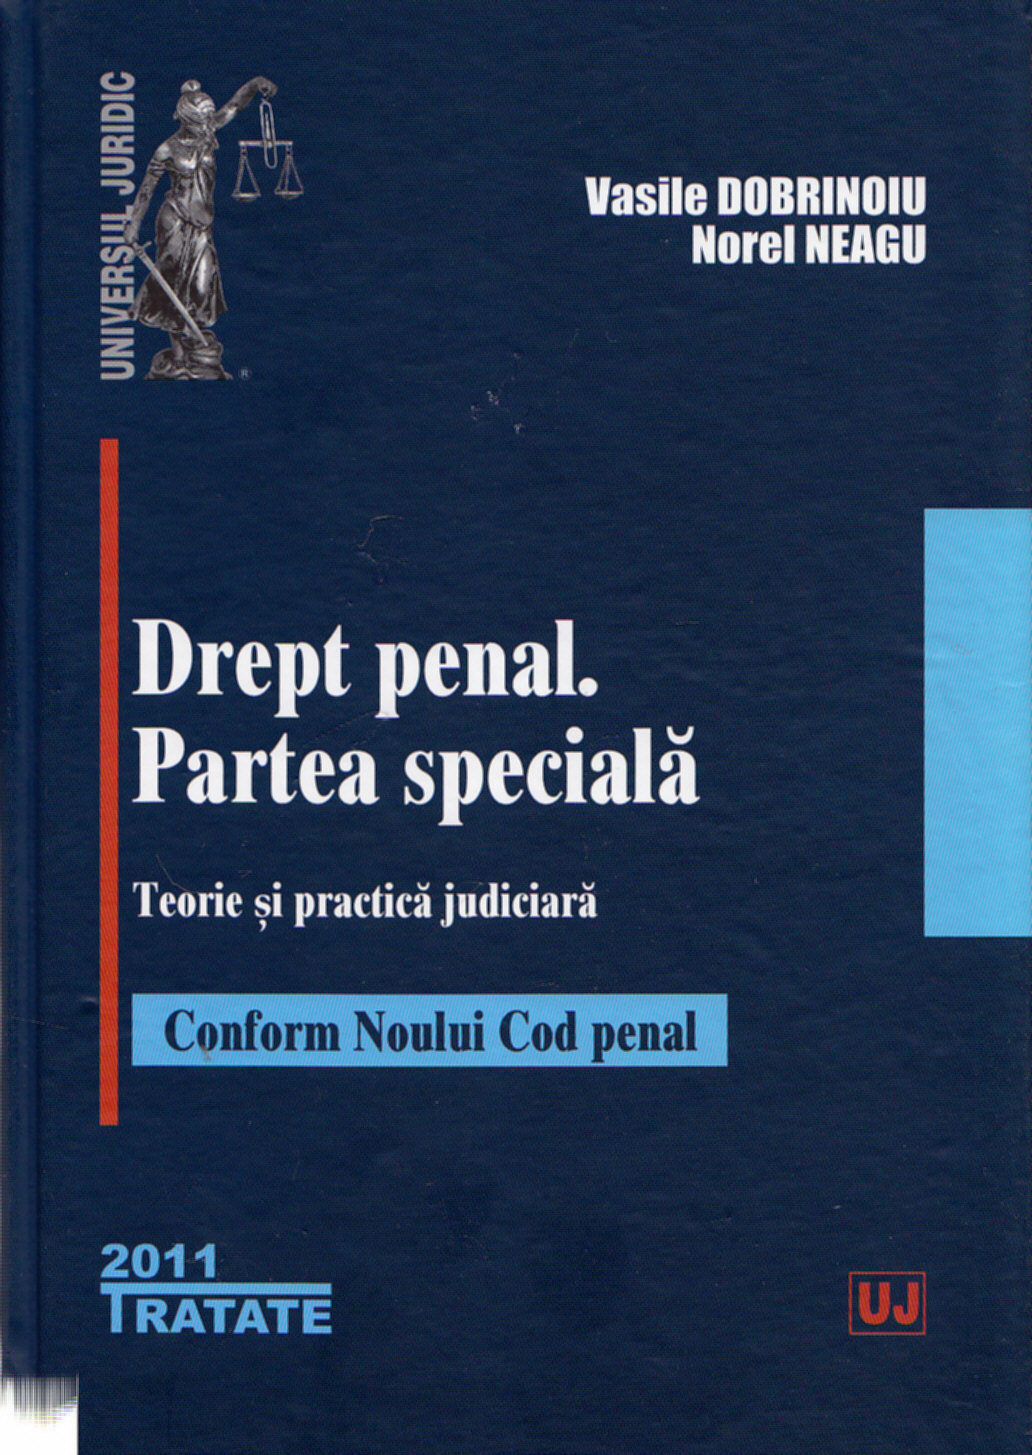 Drept Penal. Partea speciala 2011 - Vasile Dobrinoiu, Norel Neagu